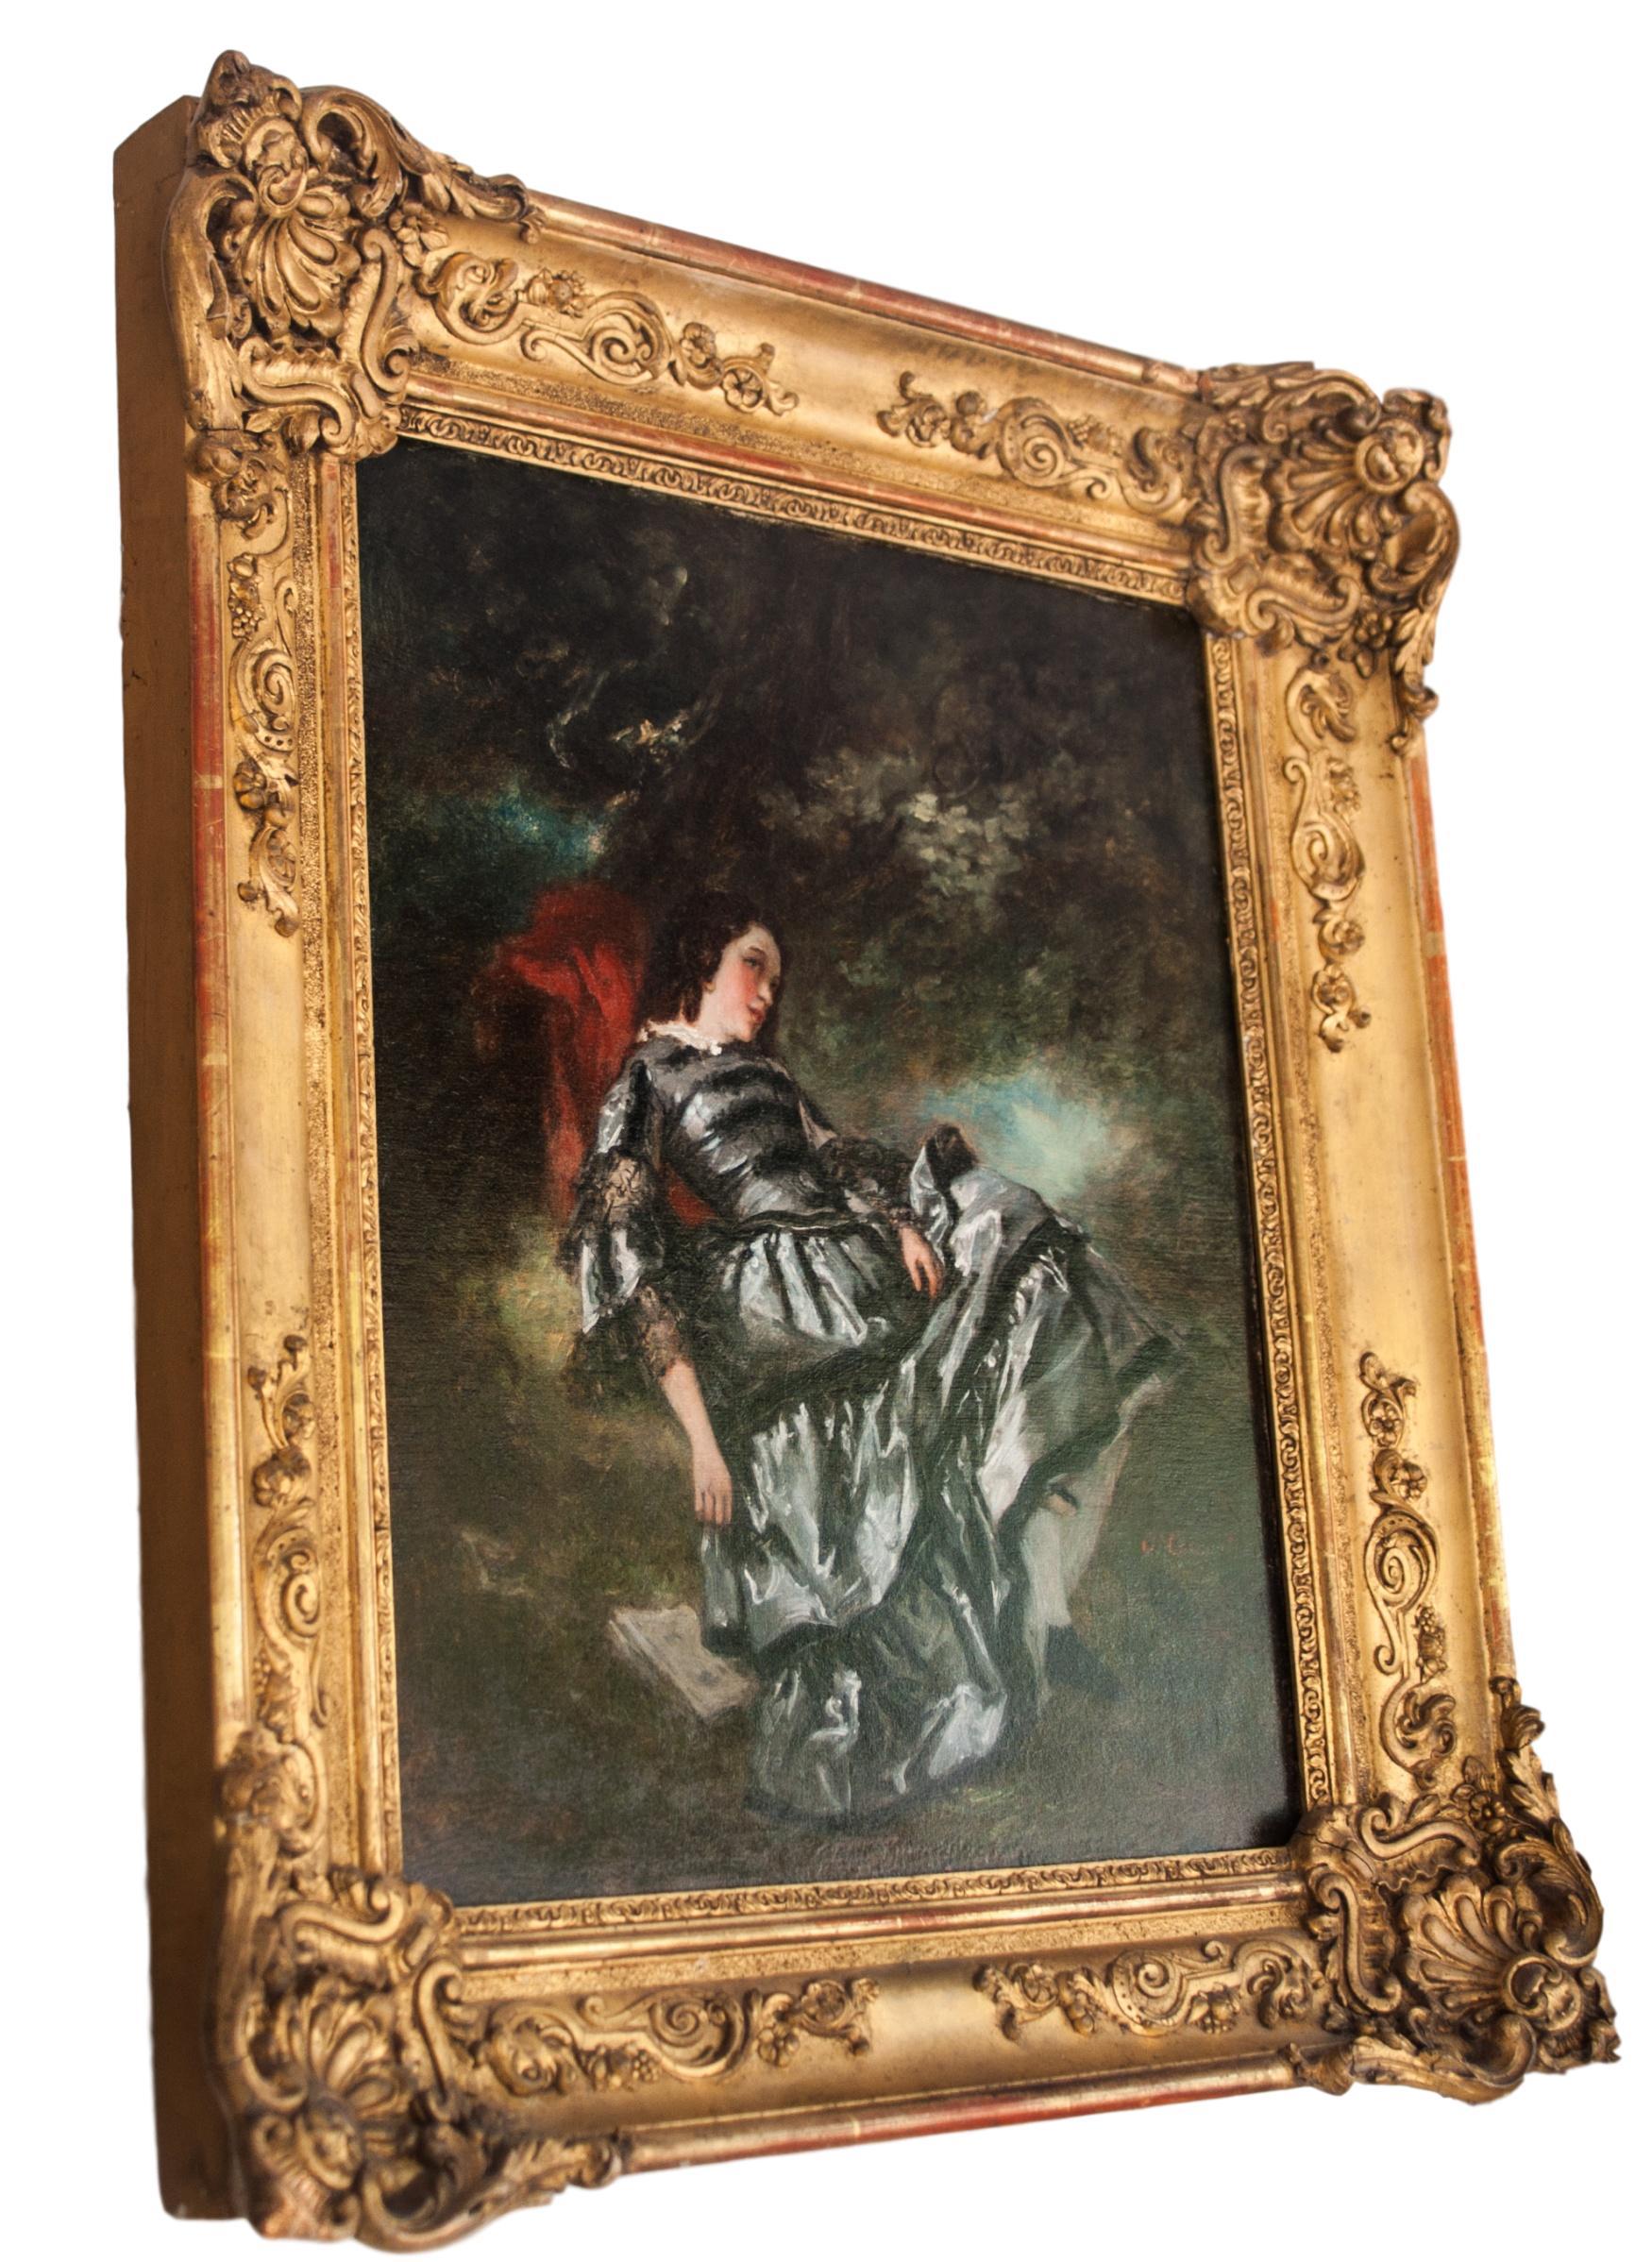 ARTIST: Nicolas François Octave Tassaert (French, 1800-1874) 
MEDIUM: Oil on canvas
TITLE: 'A lady in an elegant dress reclining under a tree' 
YEAR: circa. 1850
SIGNATURE: signed 'O. Tassaert' lower right  
SIZE: Canvas, W-15 x D-1.75 x H-18.3